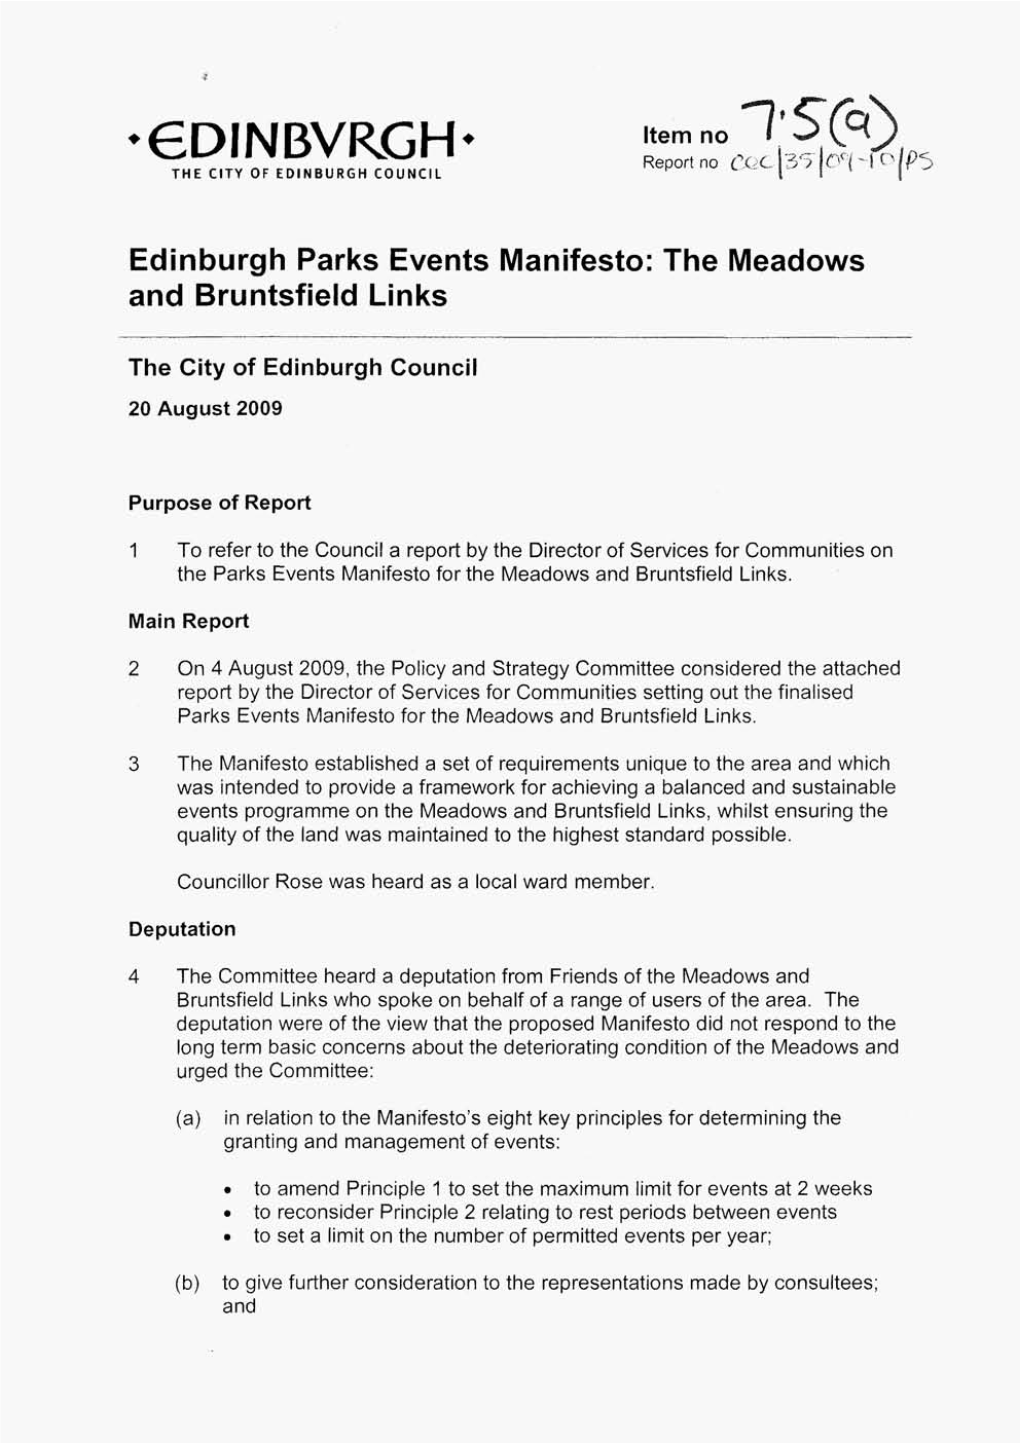 Edinburgh Parks Events Manifesto: the Meadows and Bruntsfield Links